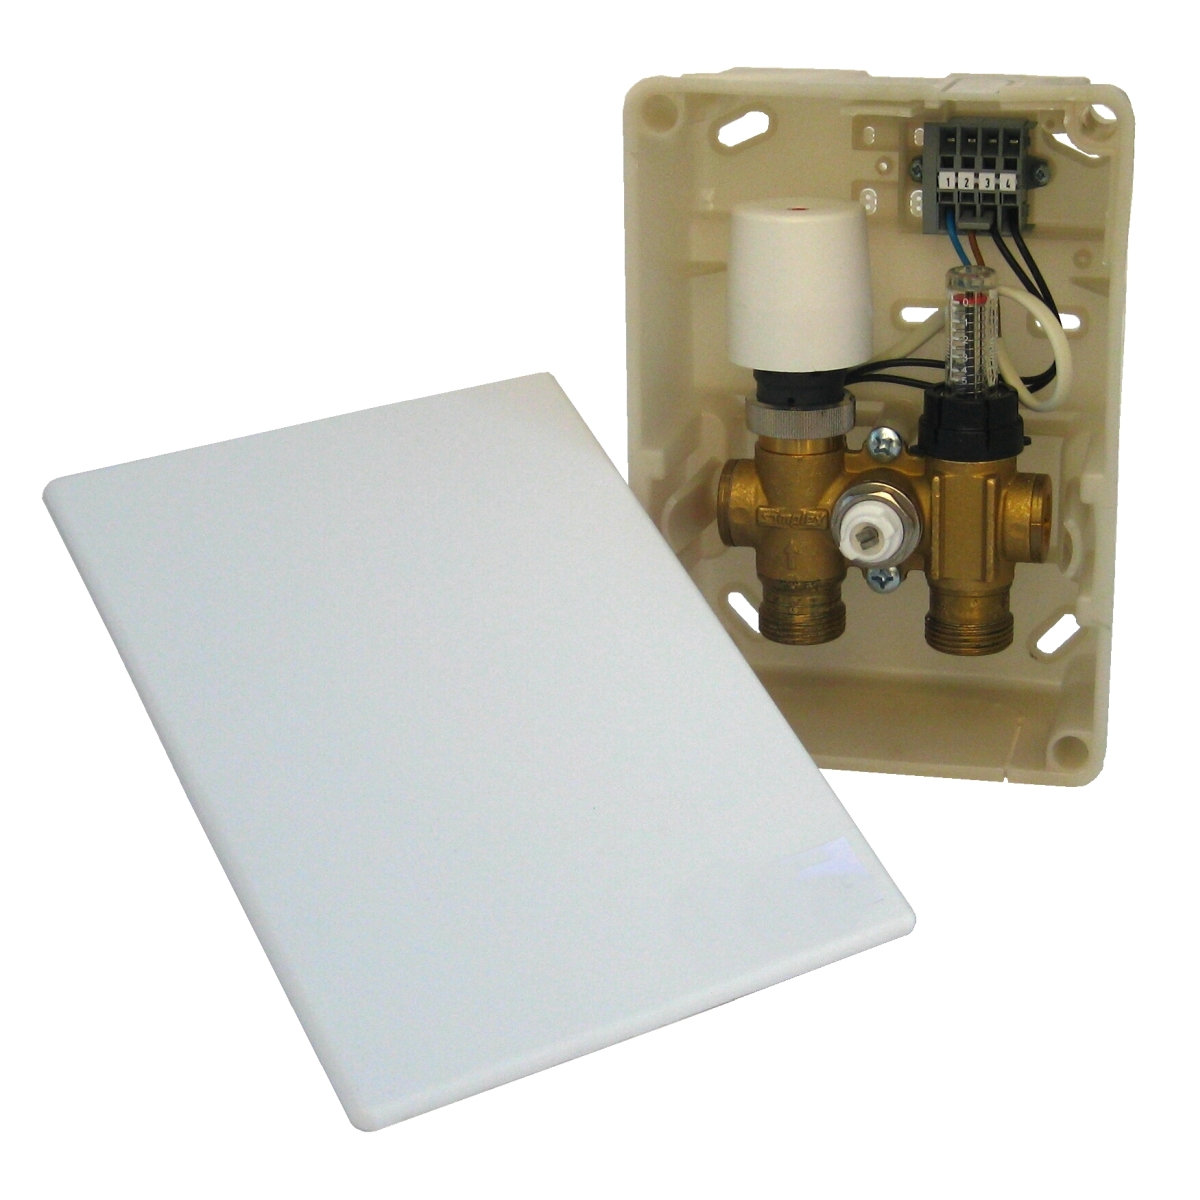 HoWaTech E-Regelbox | elektrische Rücklauftemperaturbegrenzung für Warmwasser Fußbodenheizung